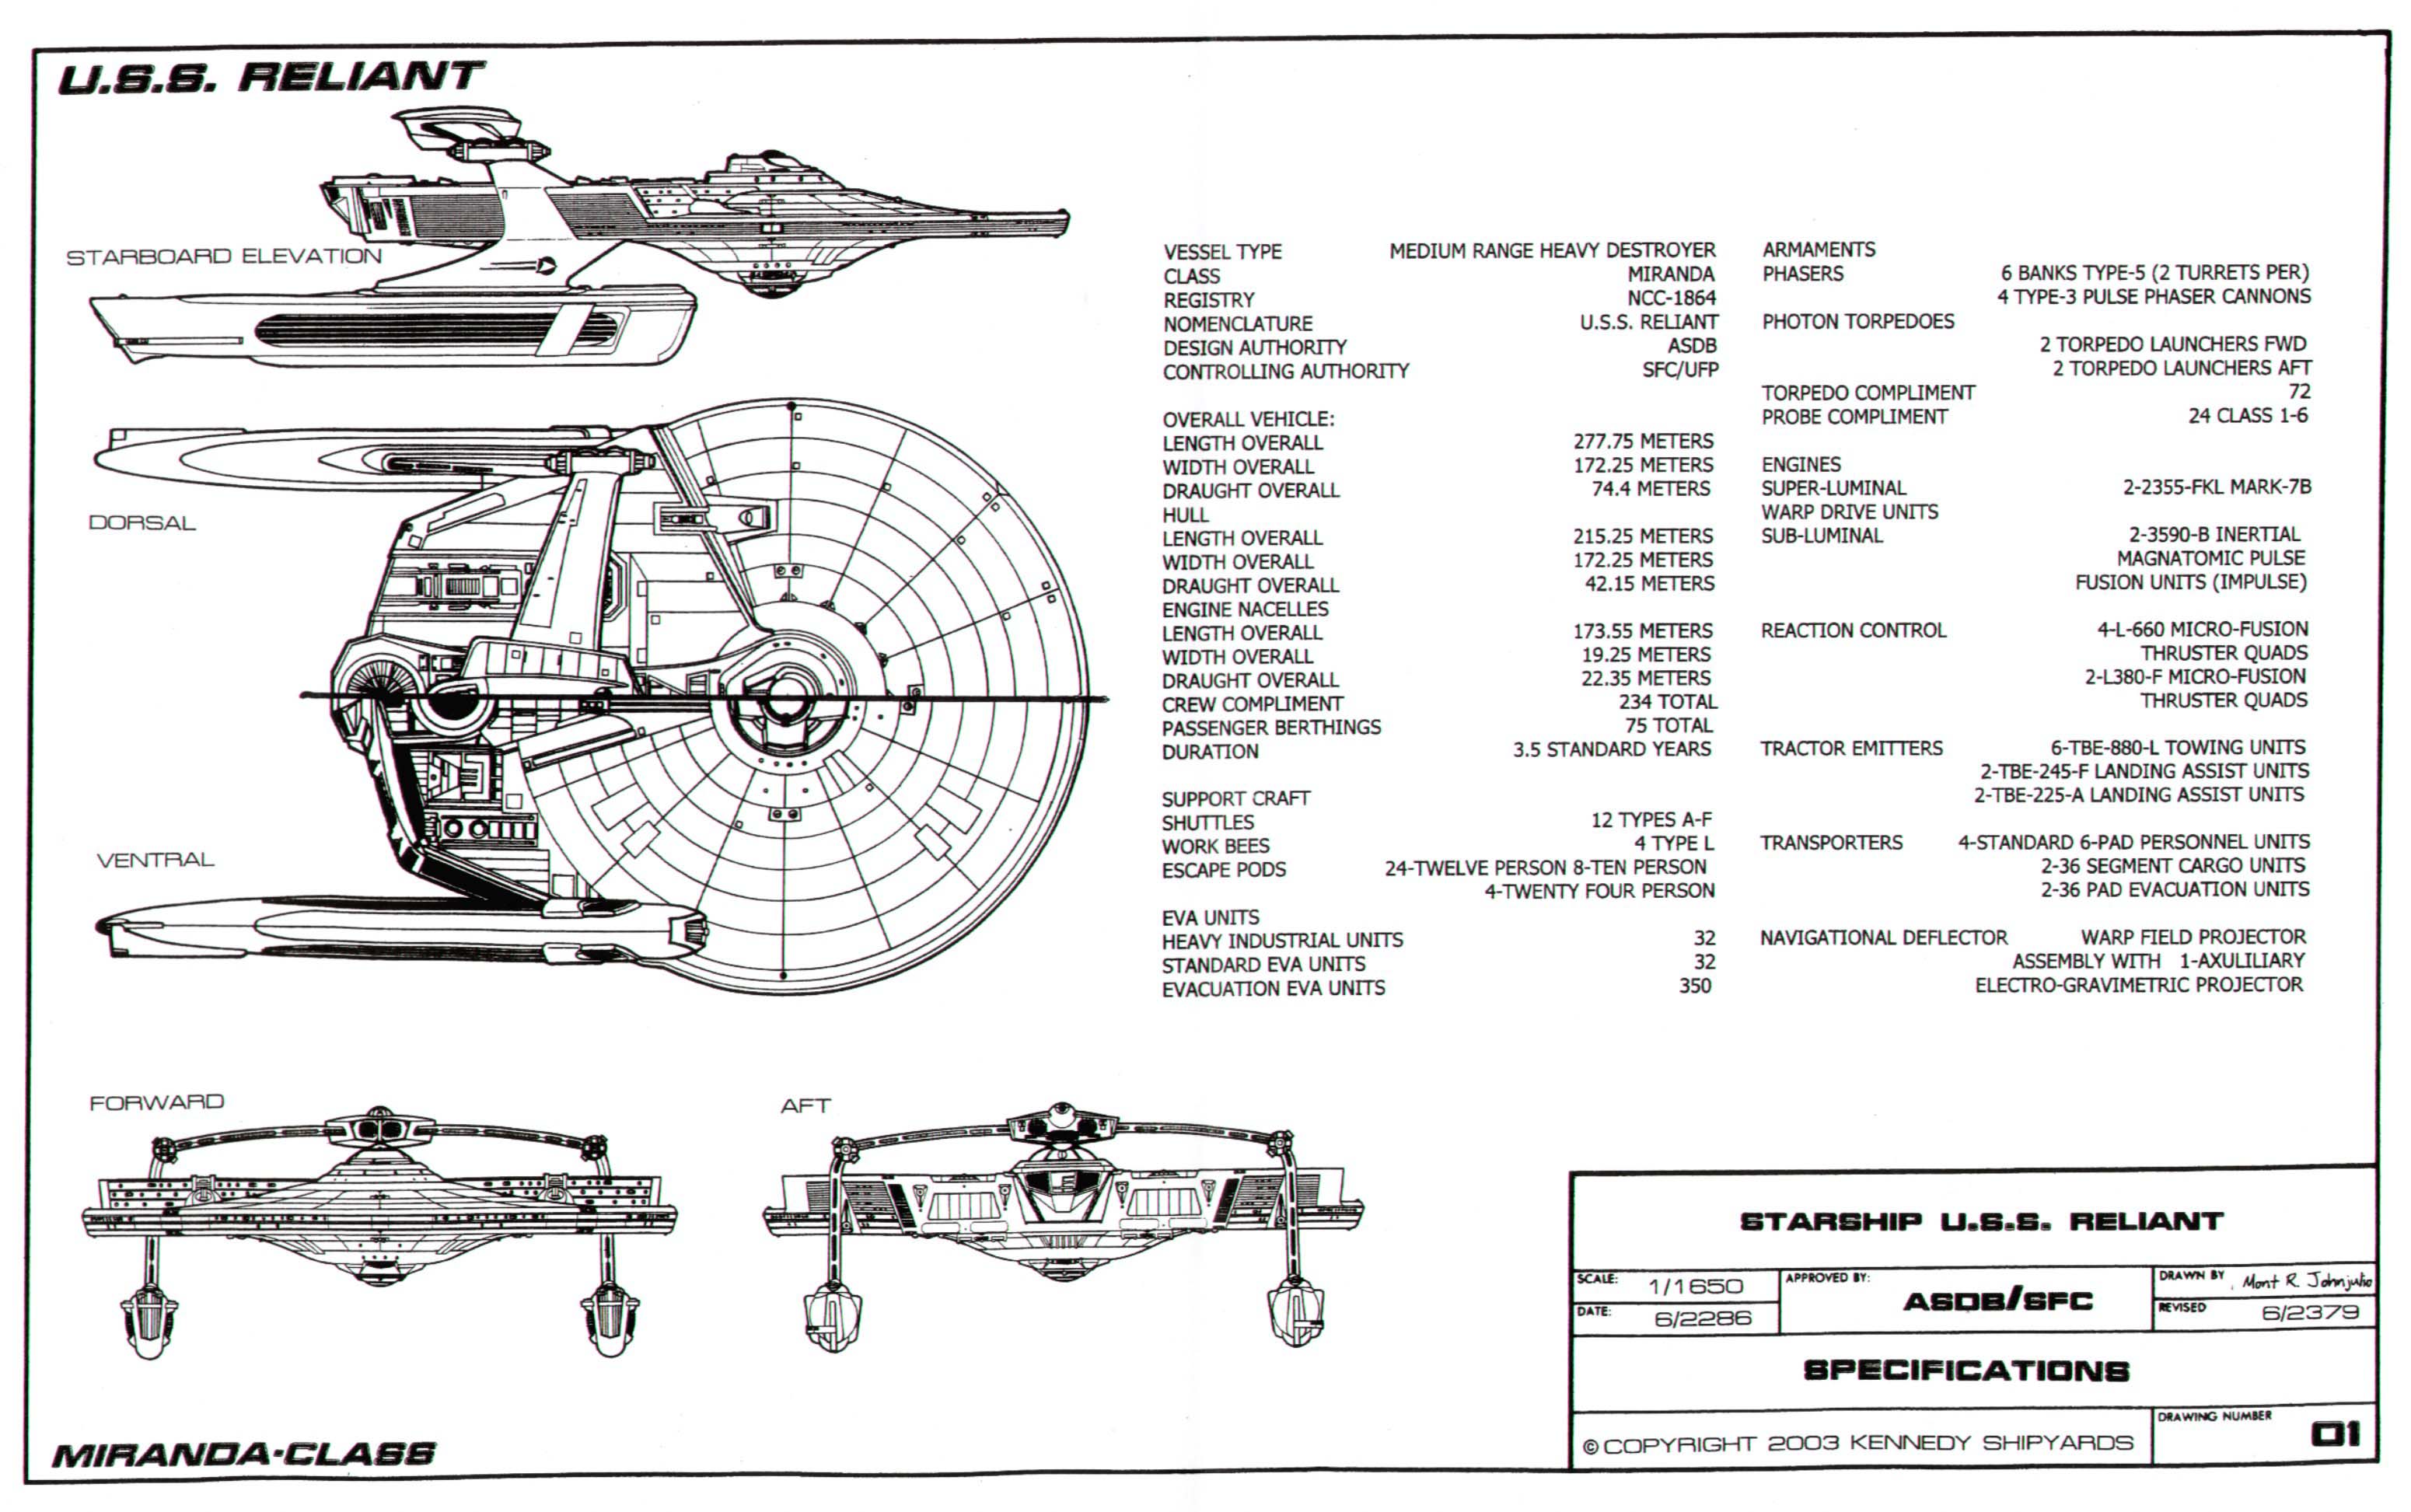 miranda-class-starship-uss-reliant-ncc-1864-sheet-1.jpg